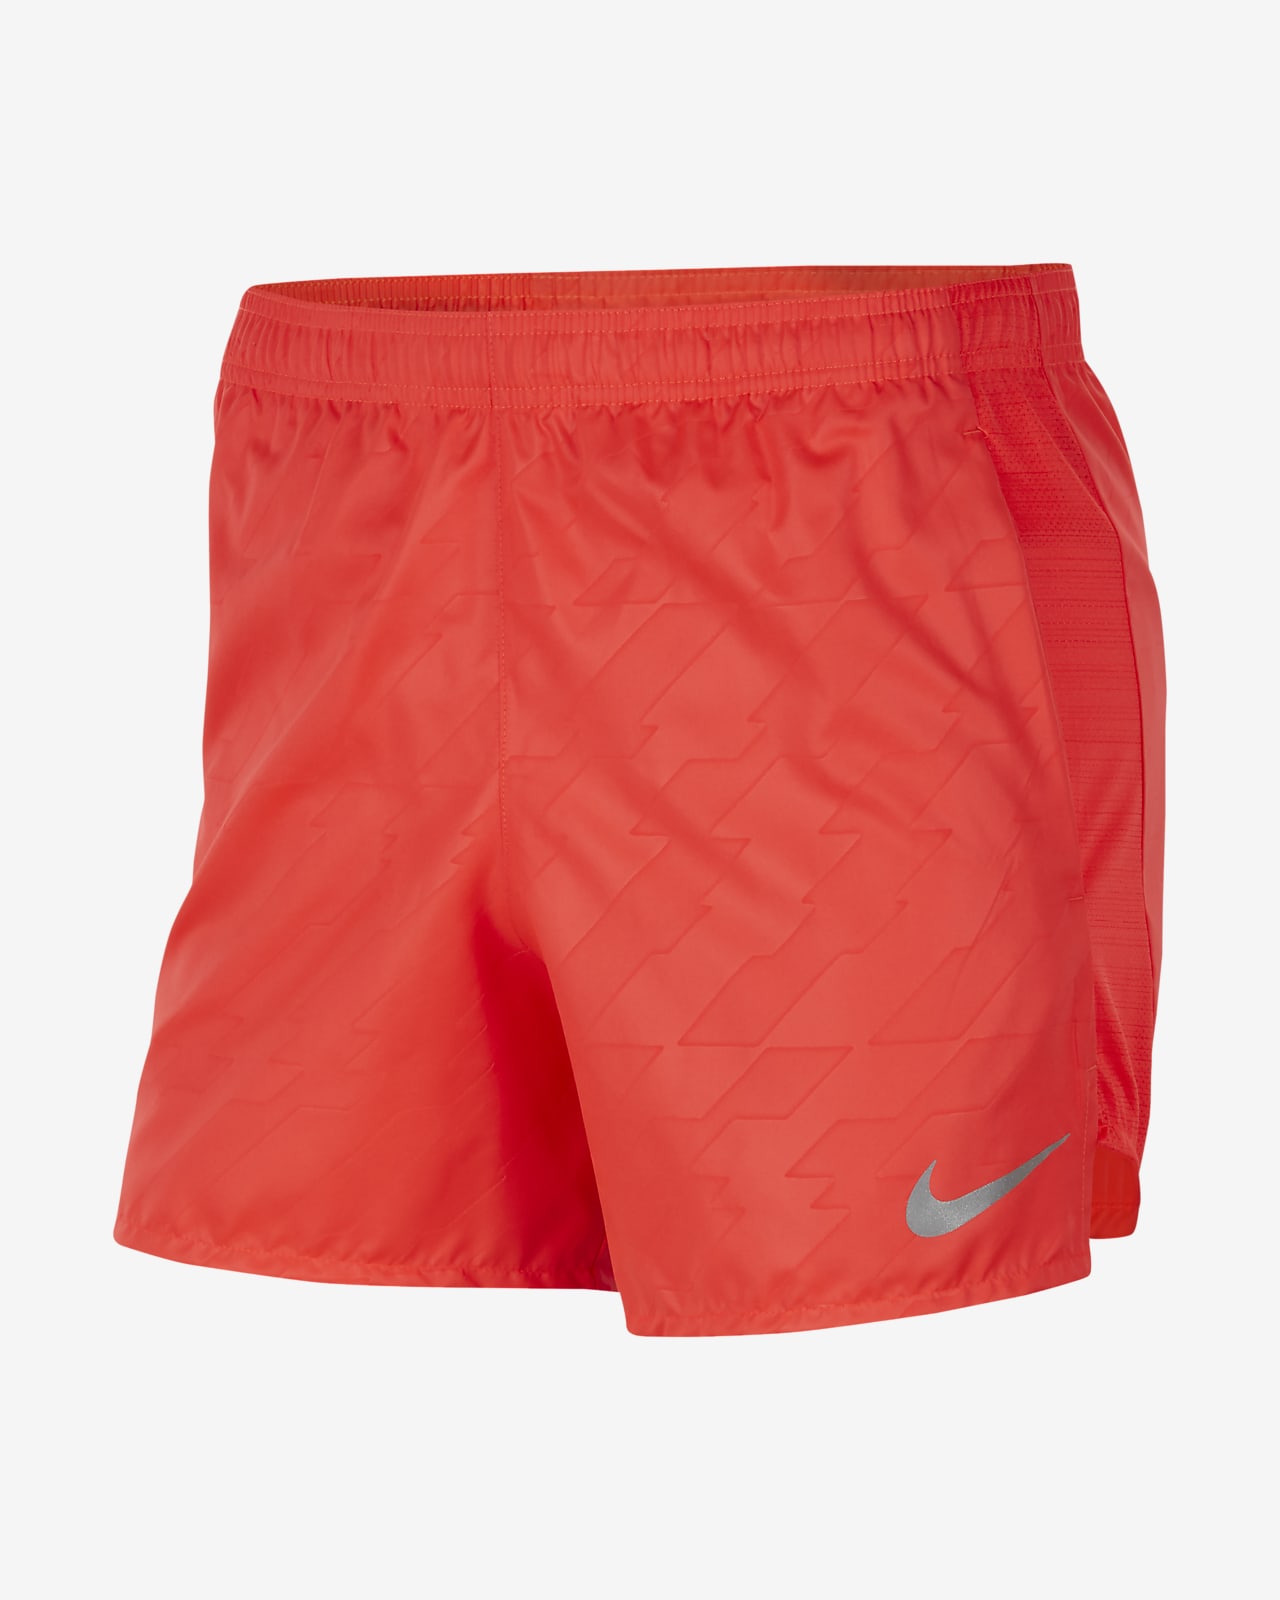 Nike Challenger Future Fast Men's Printed Running Shorts